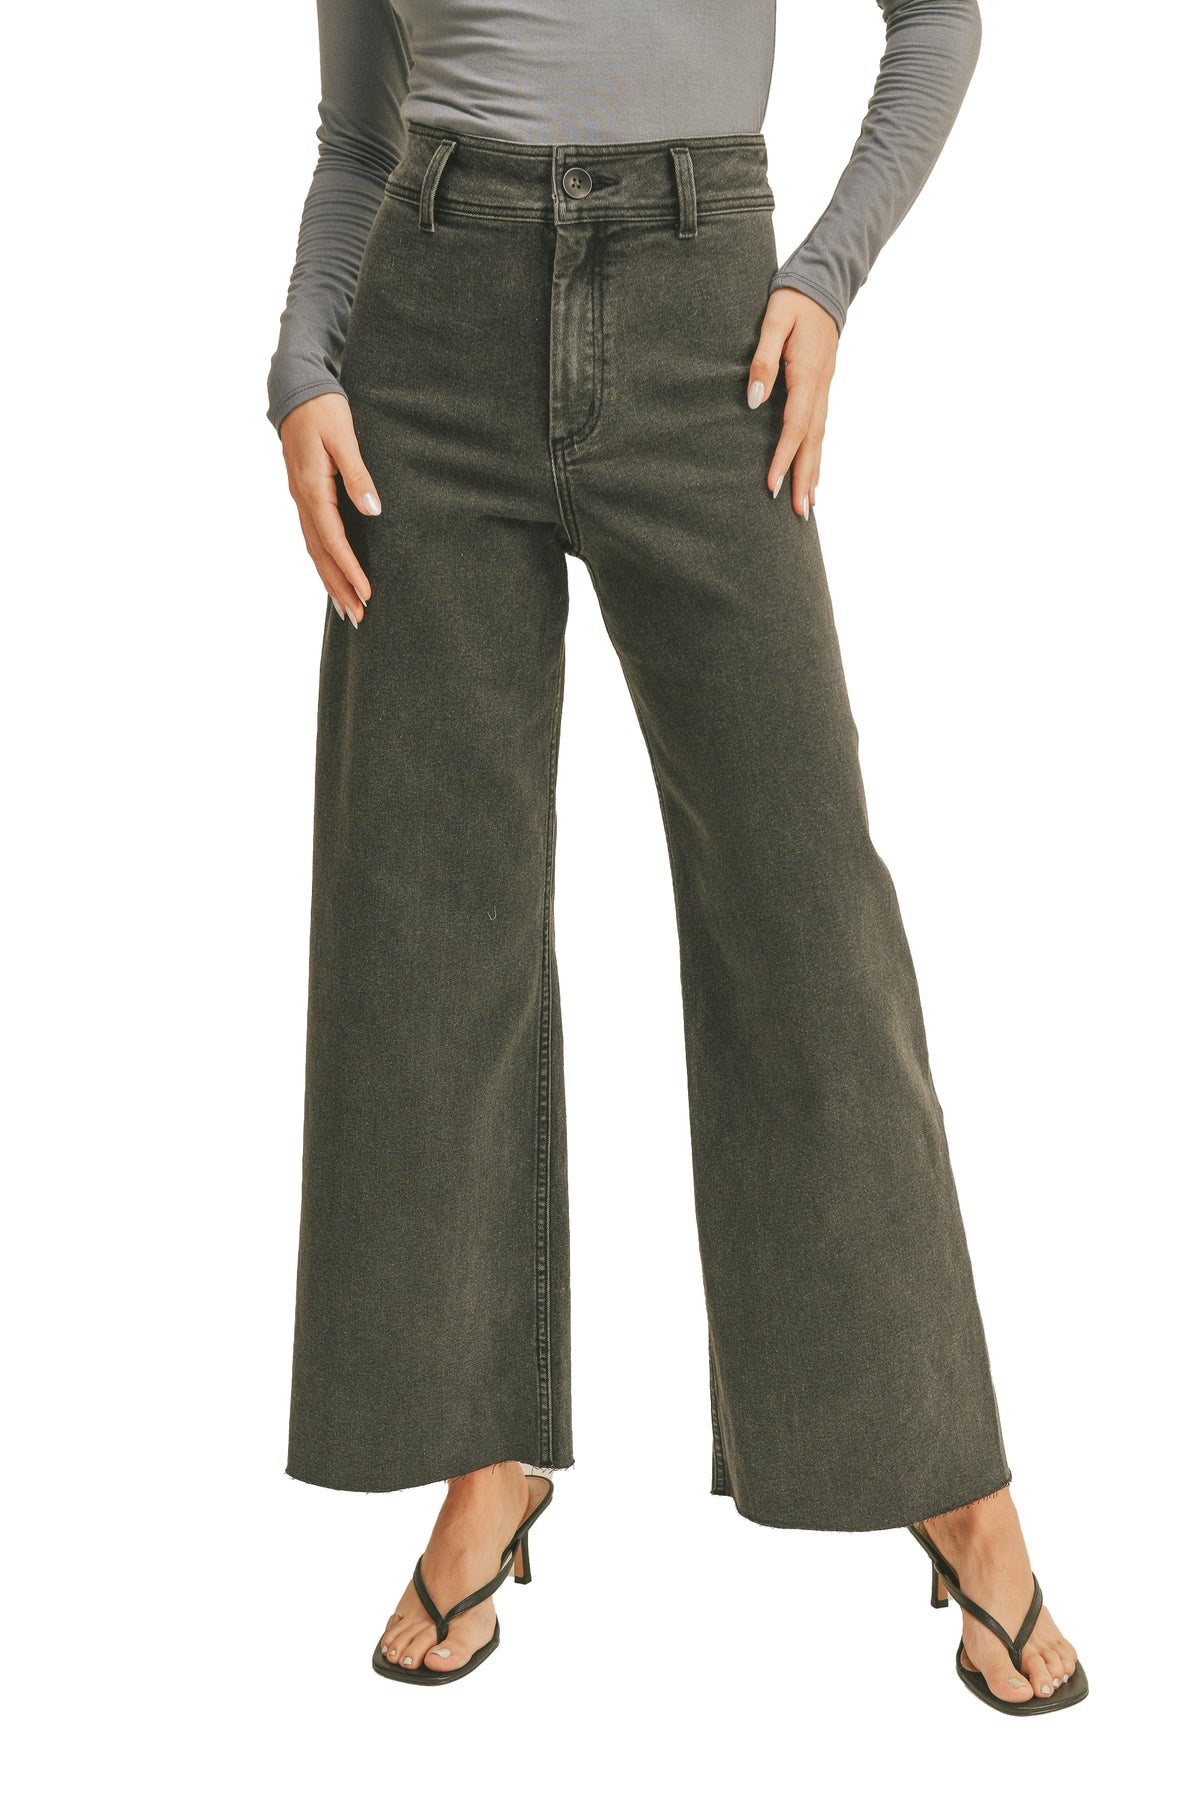 Lands'End Light Khaki Wide Leg Capri Pants - Size 10 - 100% Cotton - Mid  Rise - $19 - From Angie